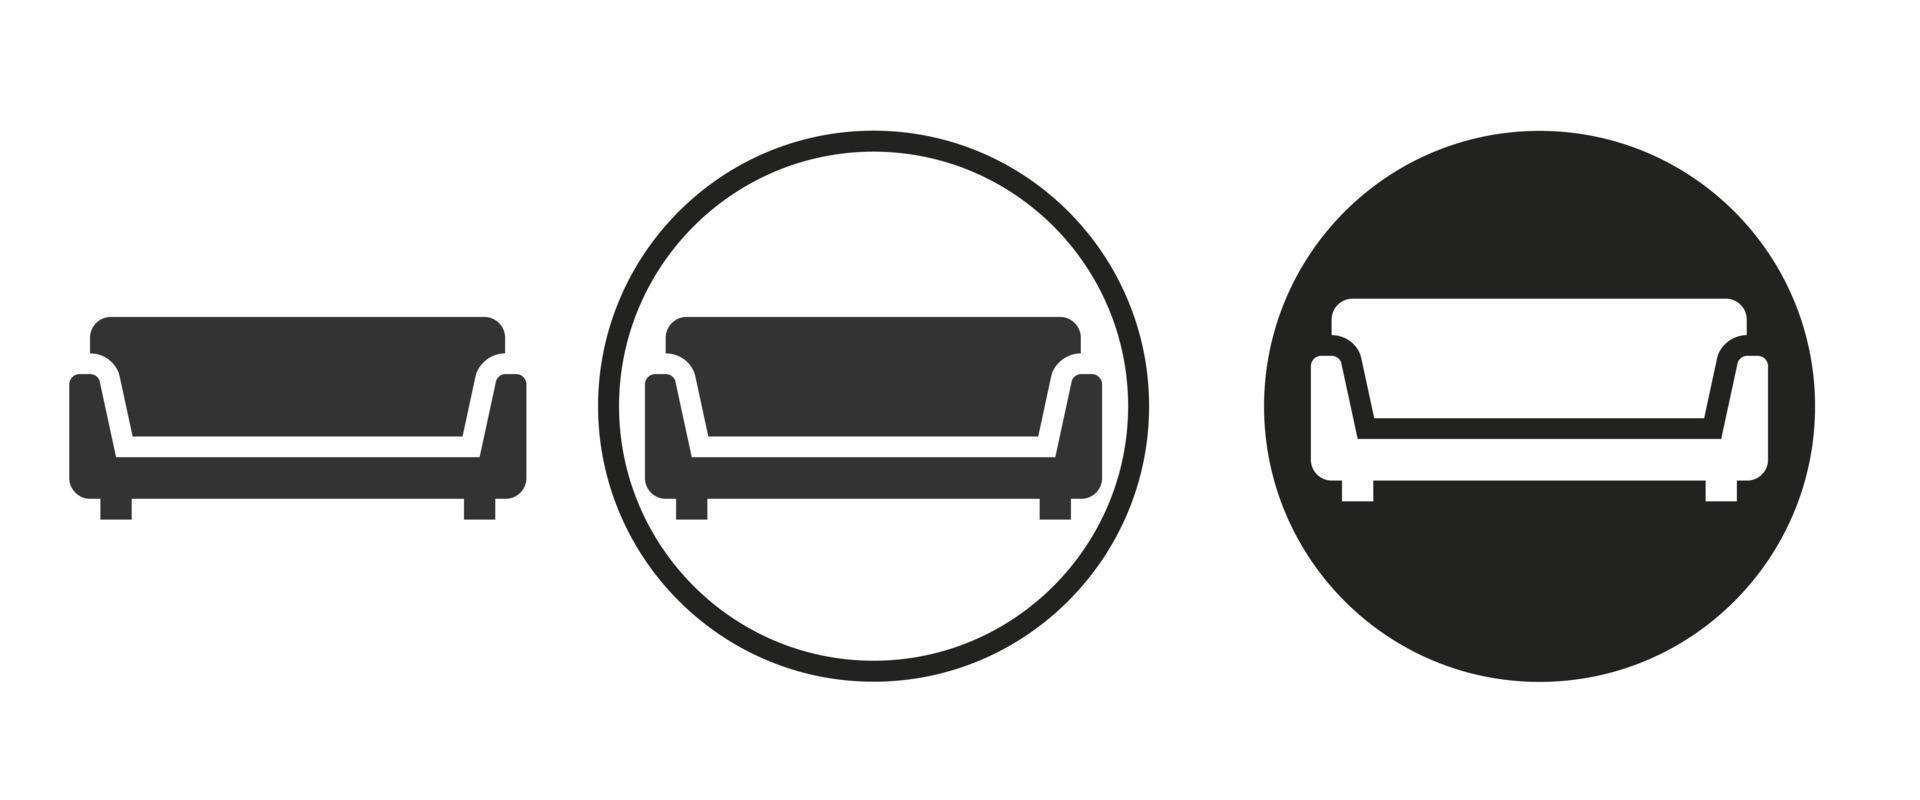 Sofa icon . web icon set .vector illustration vector